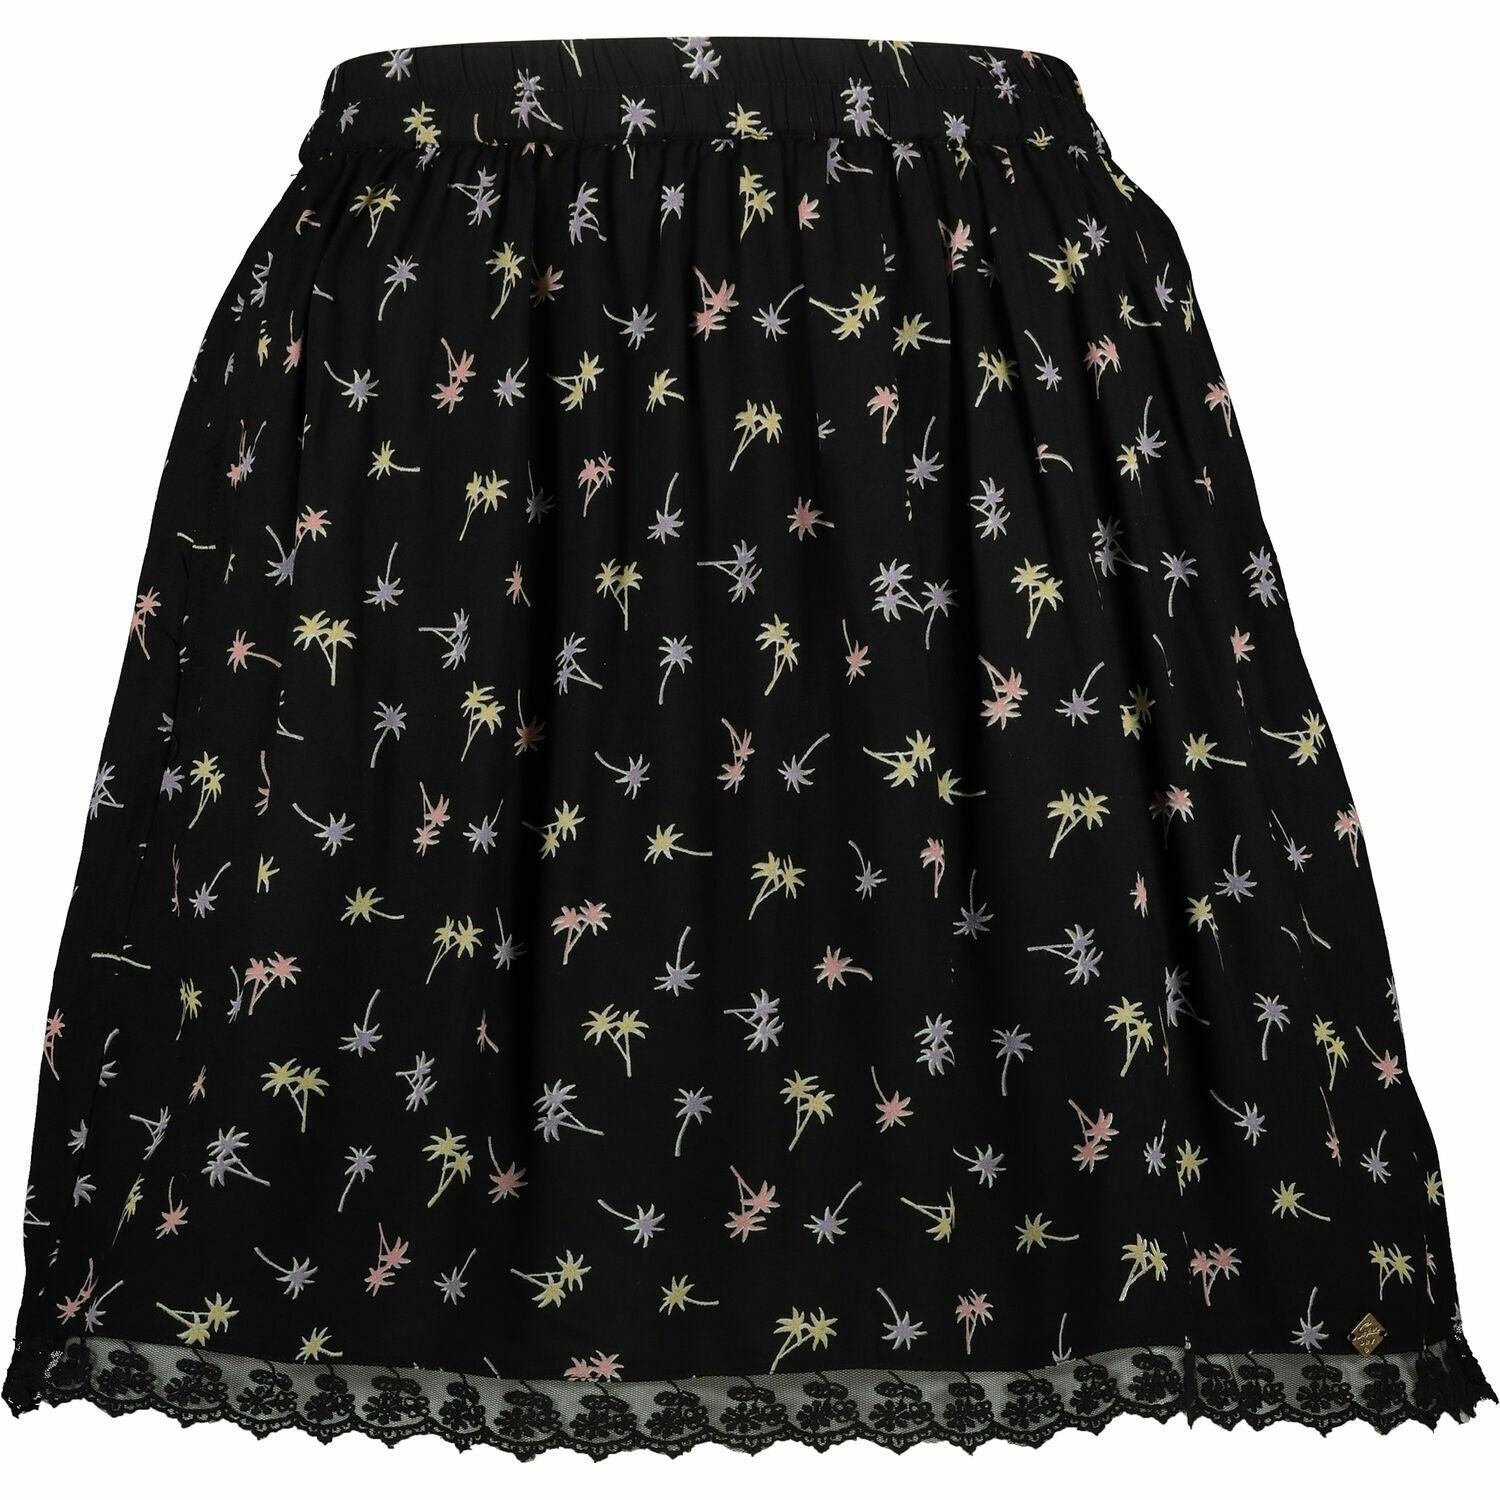 SUPERDRY Women's SERENA DITSY Skirt, Black/Palm Tree Print, size XS / UK 8